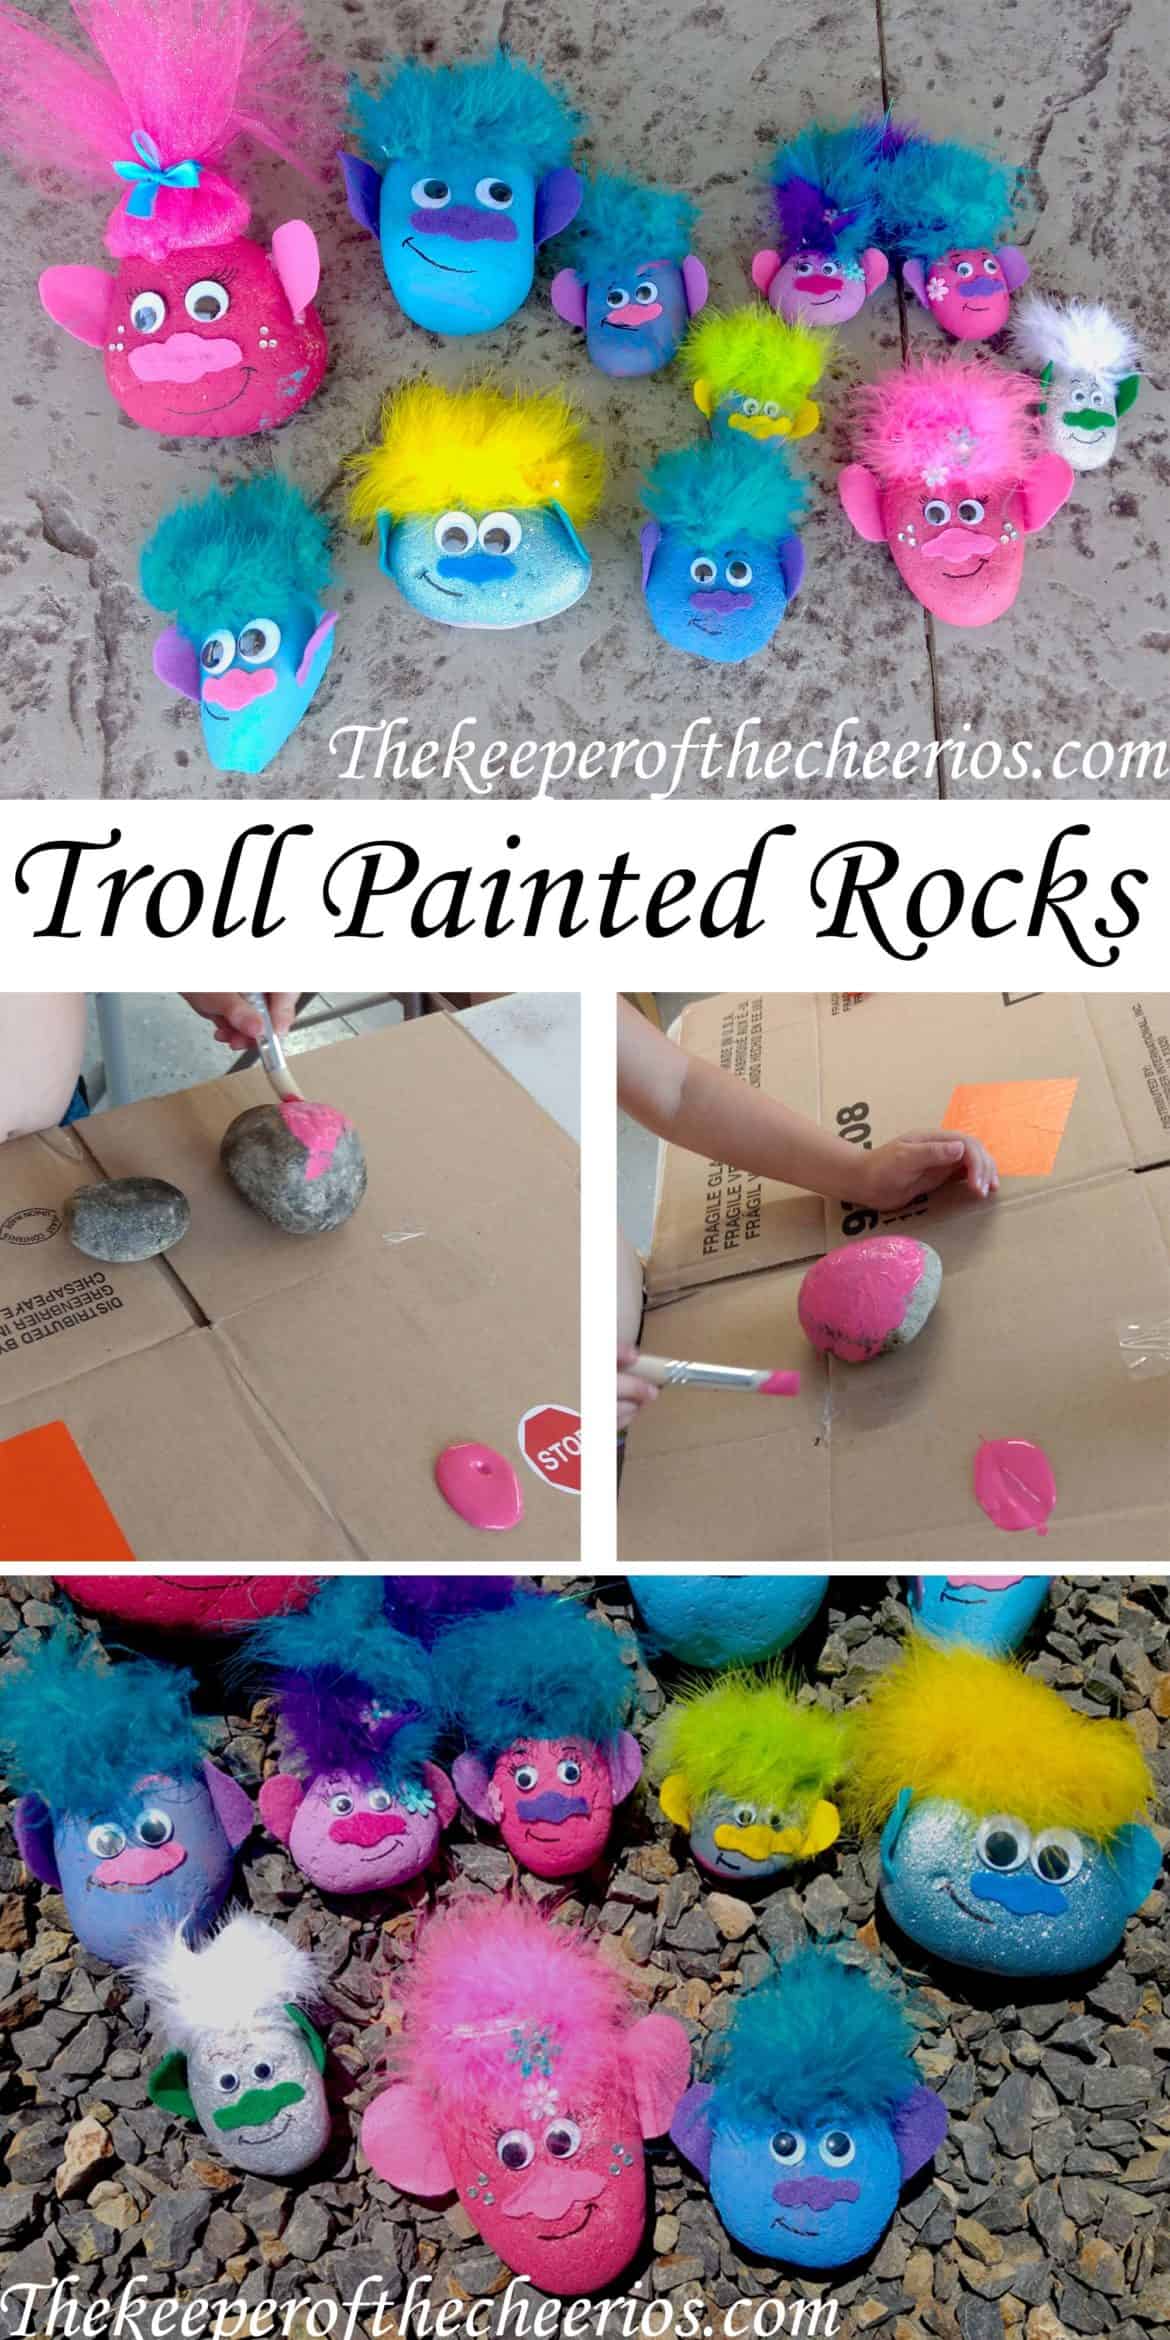 Troll painted rocks